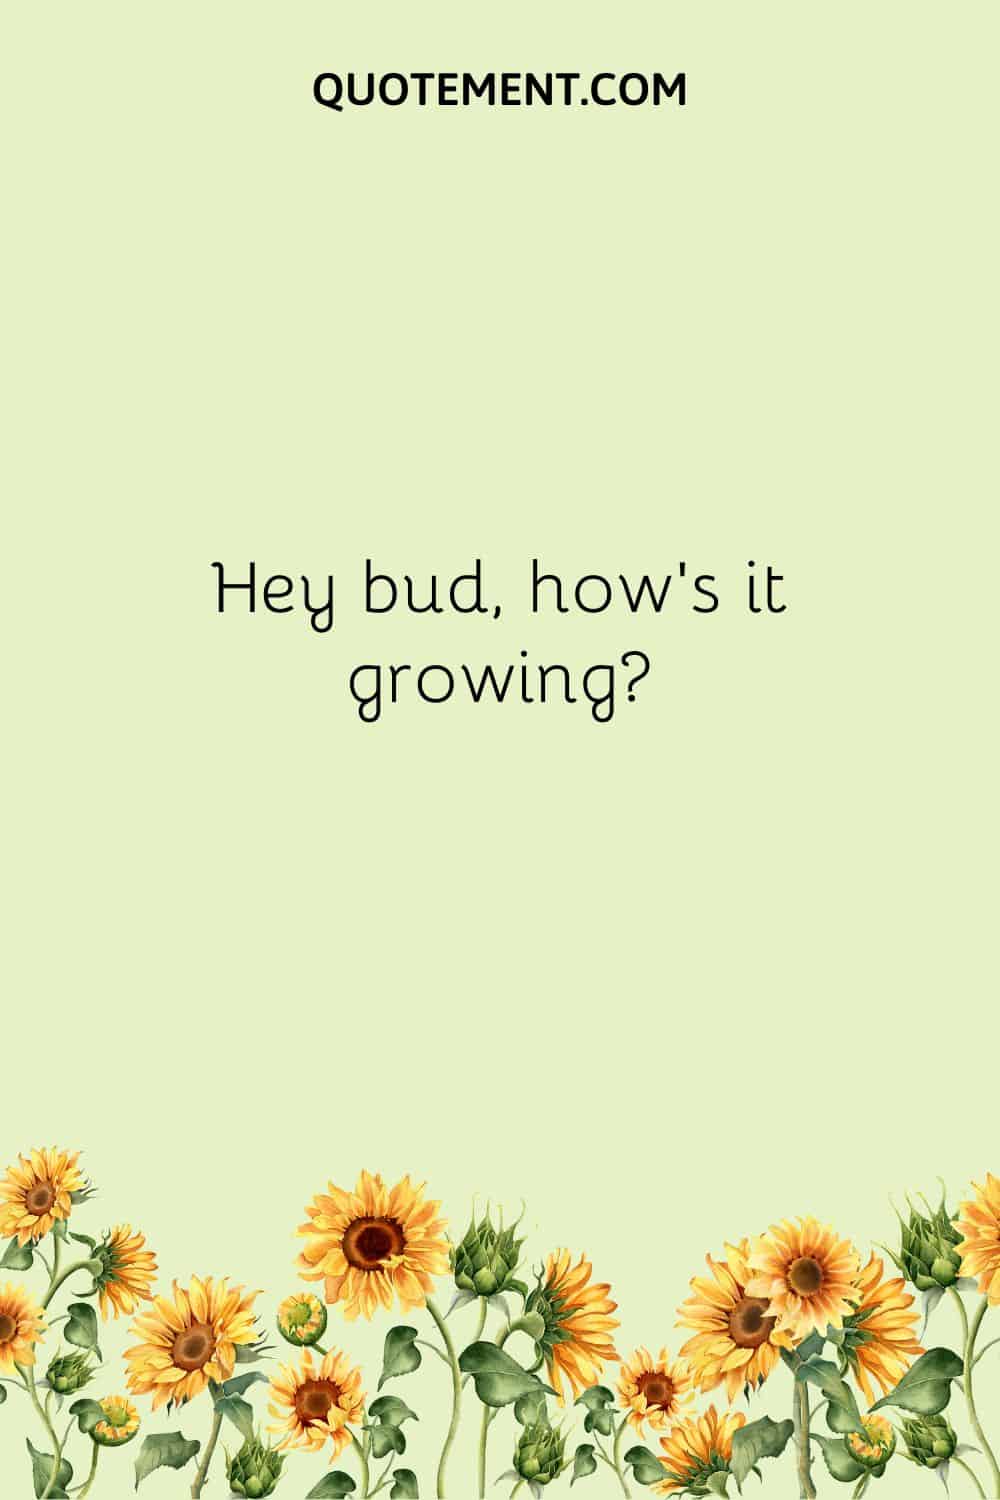 Hey bud, how’s it growing